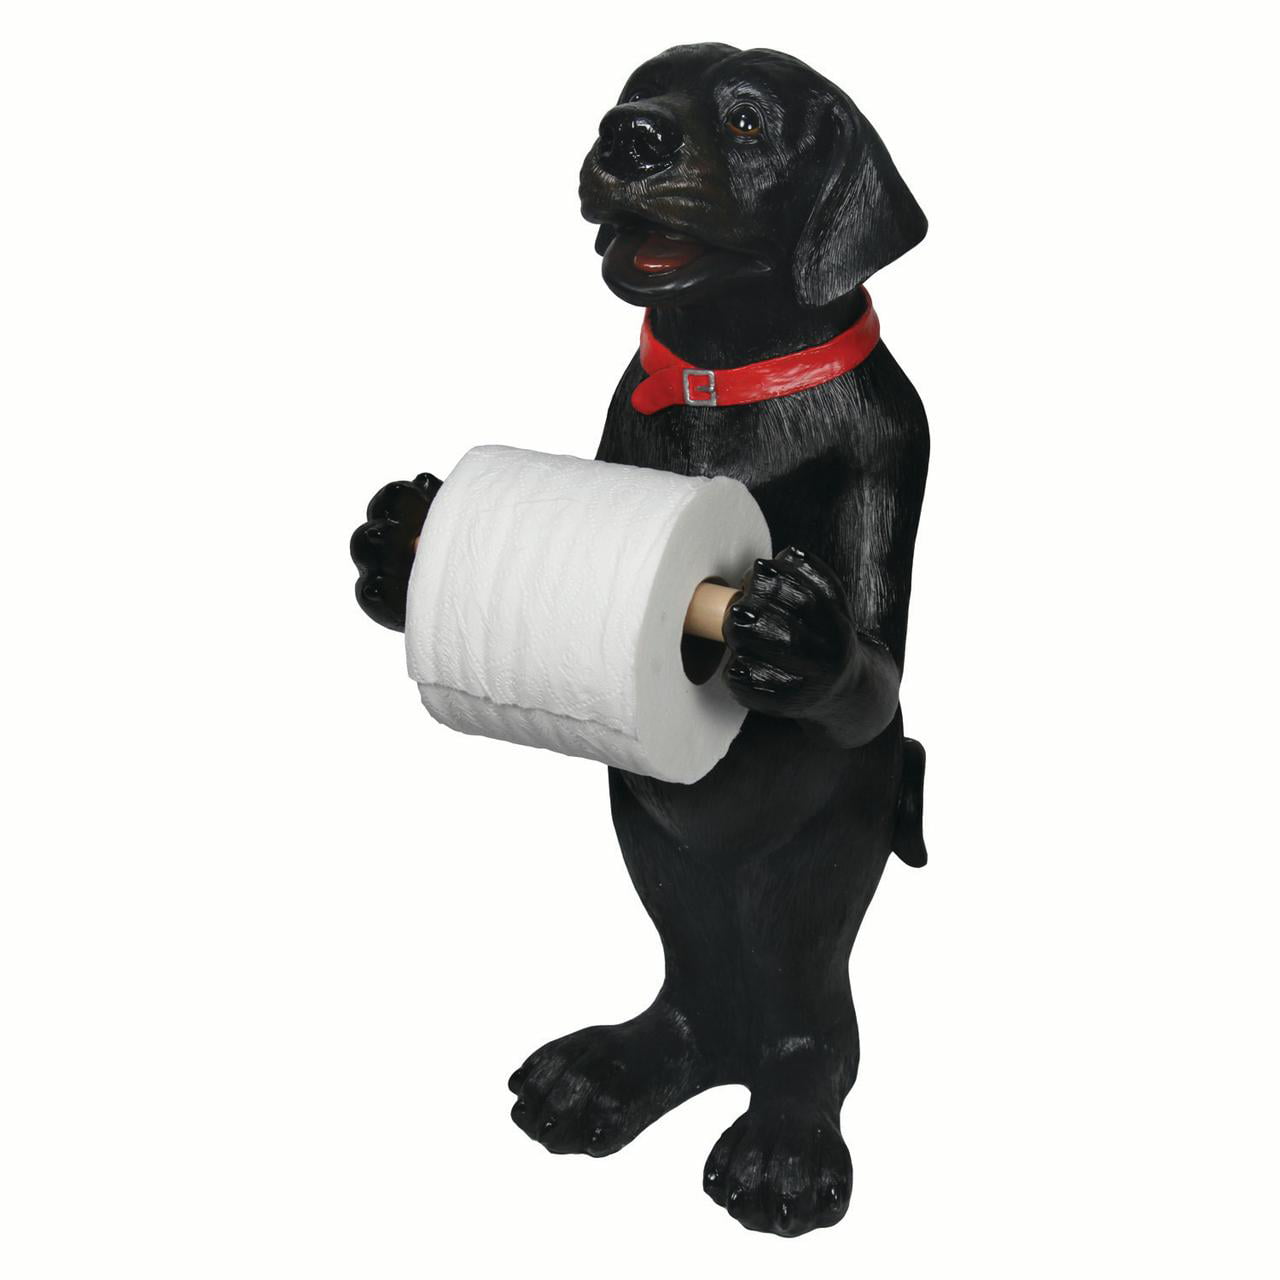 Animal Toilet Paper Holder Dog Shaped Carved Free Standing